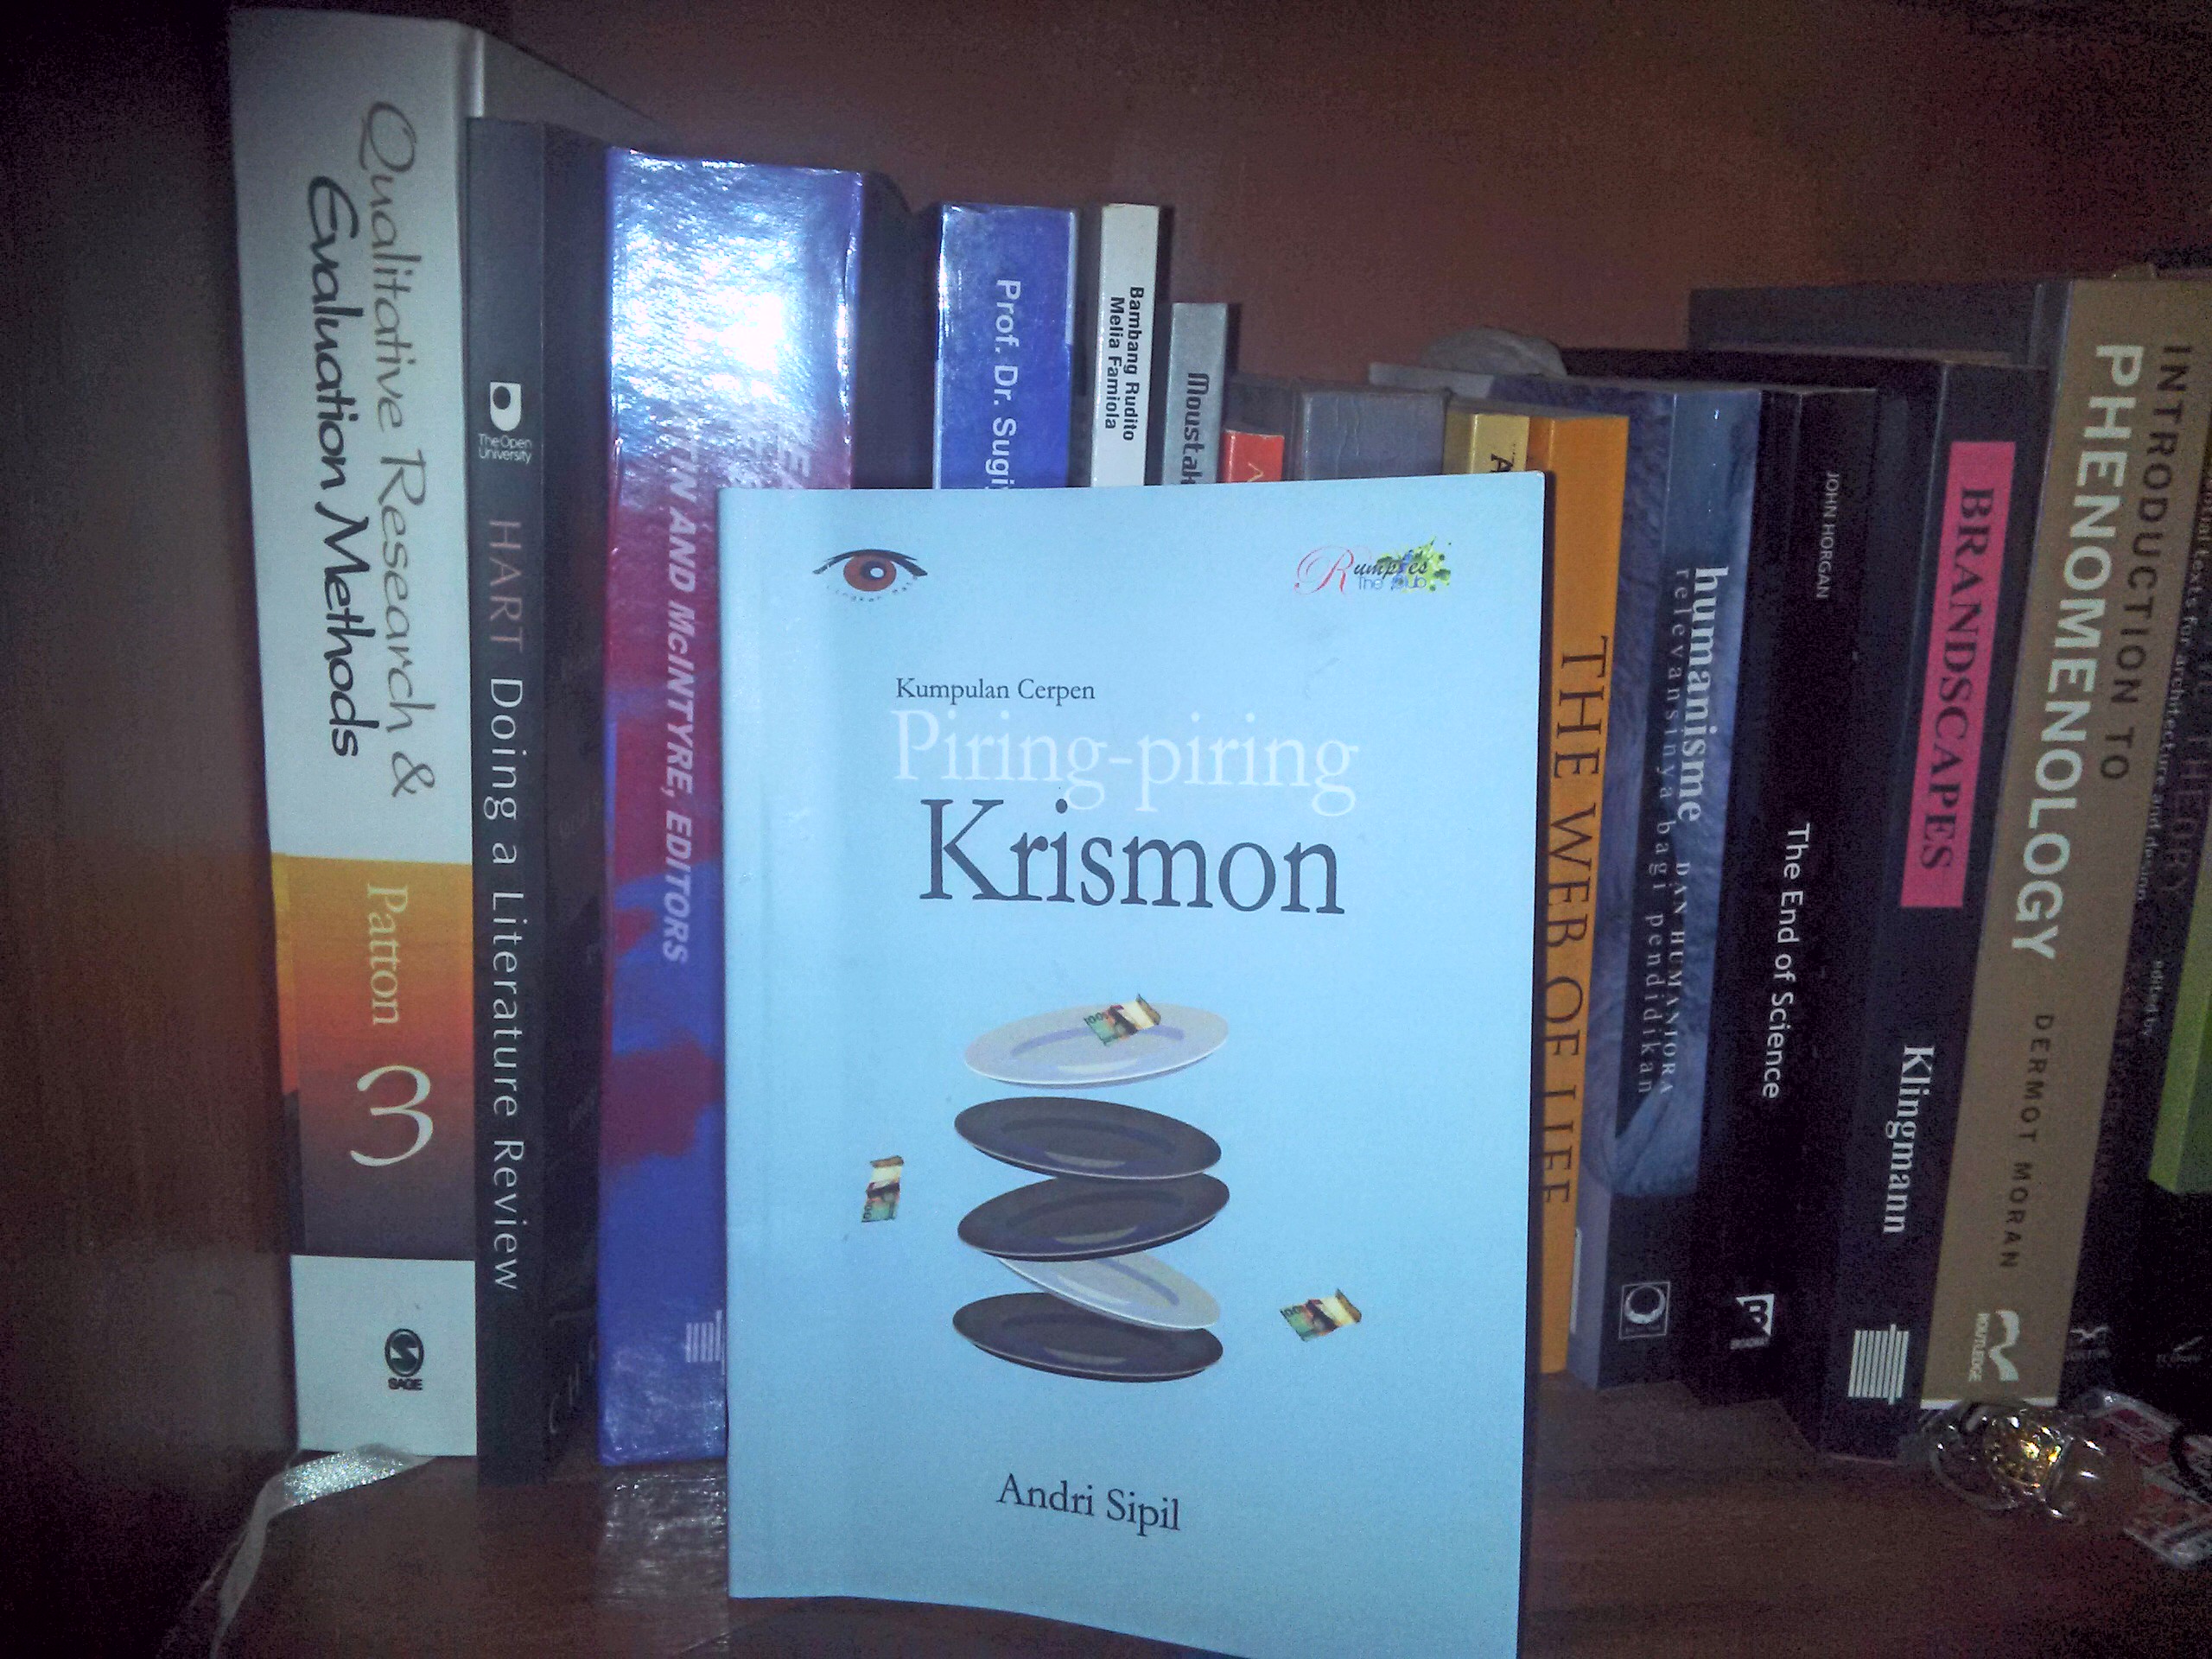 Foto buku kumpulan cerpen 'Piring-piring Krismon' karangan Andri Sipil II sumber foro; Dok. Pebrianov